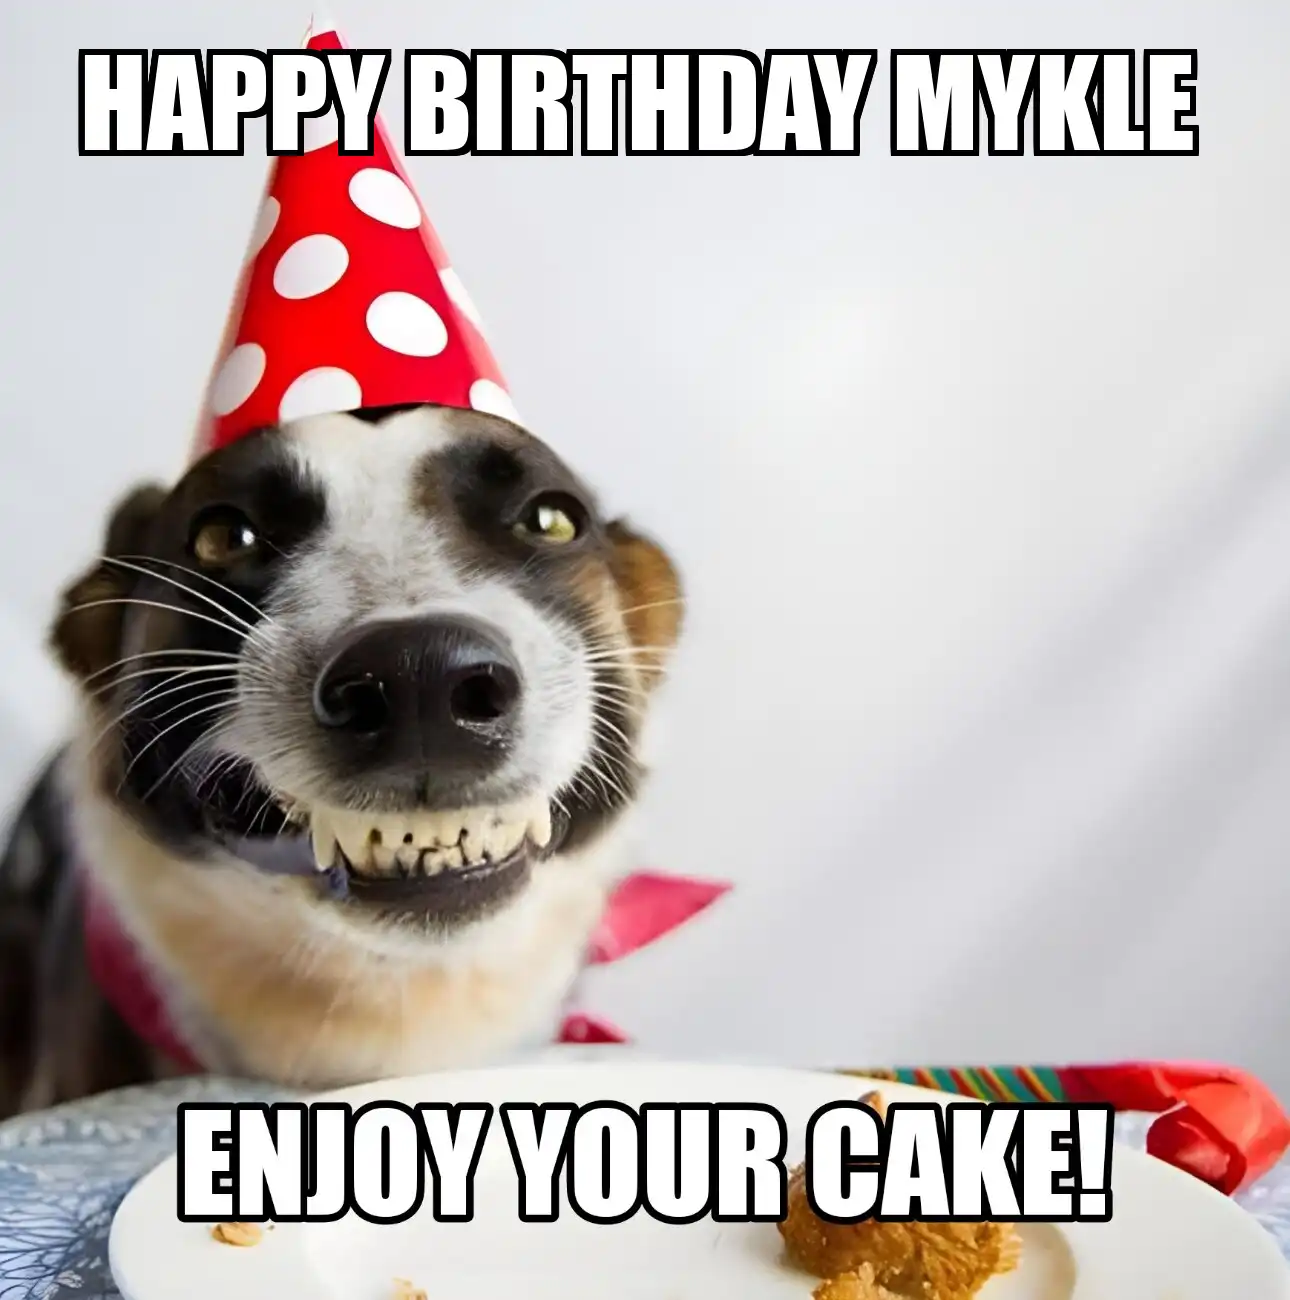 Happy Birthday Mykle Enjoy Your Cake Dog Meme